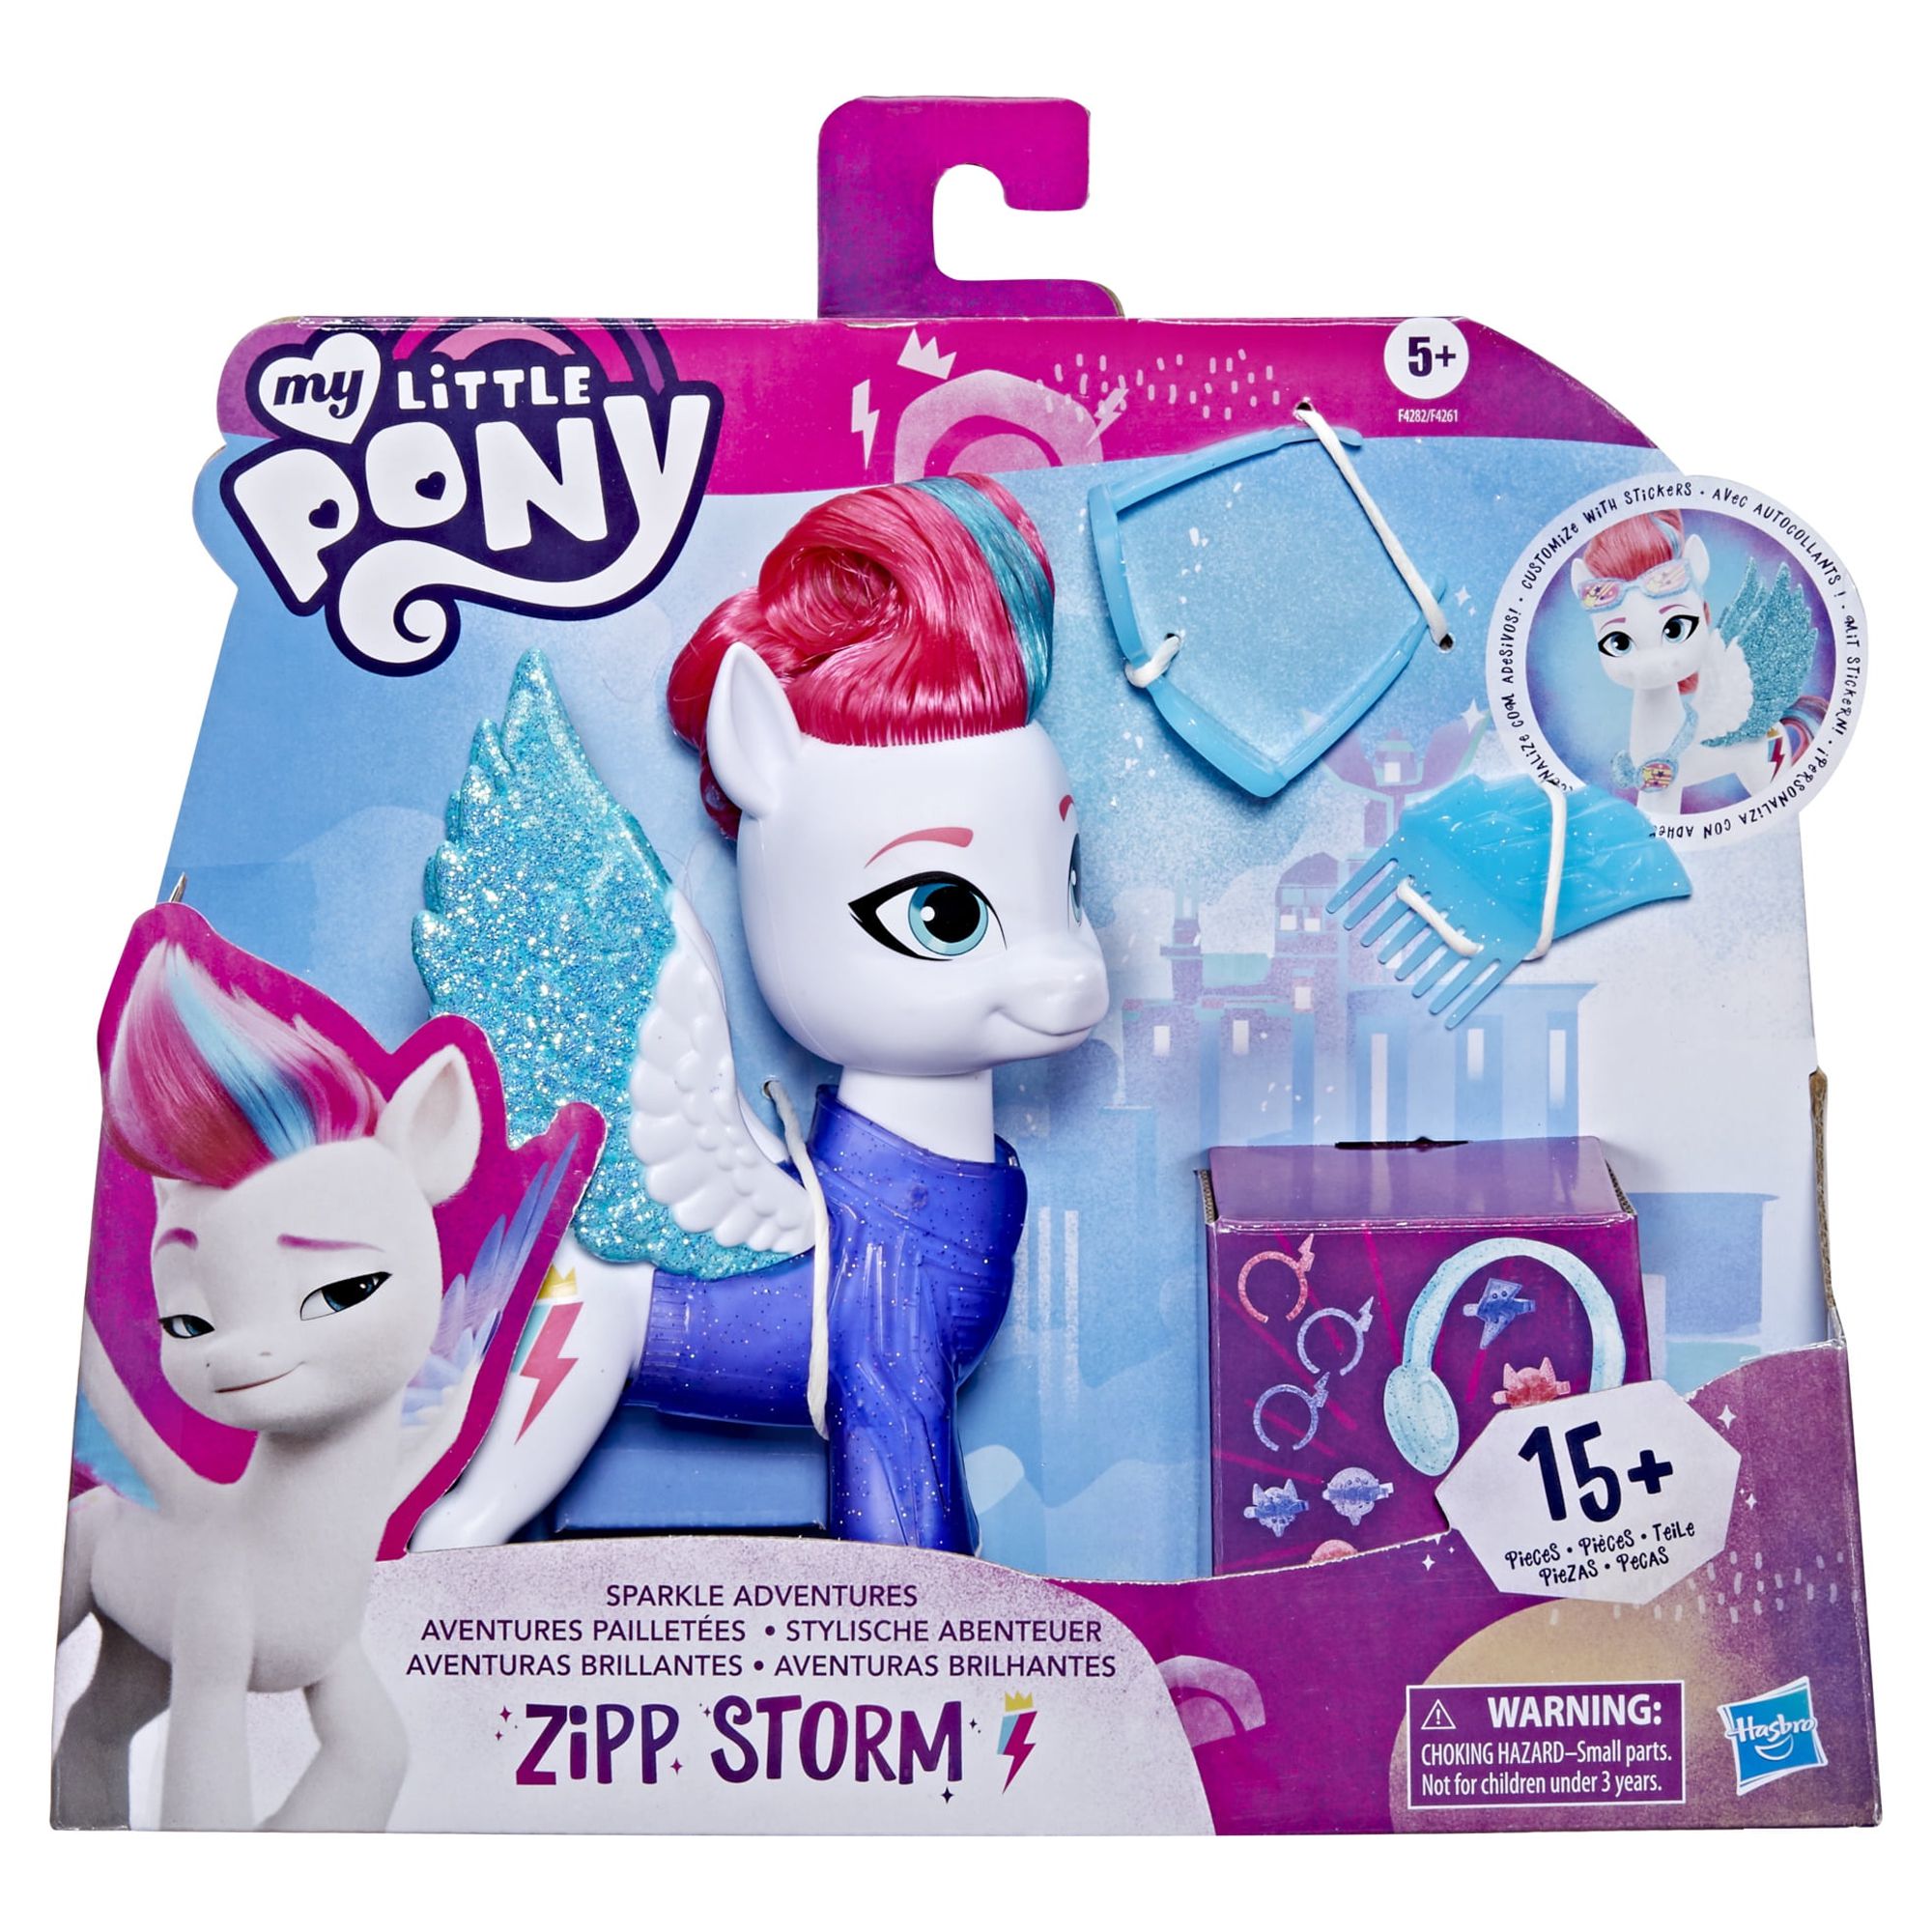 My Little Pony: A New Generation Zipp Storm Sparkle Adventures, Walmart Exclusive - image 3 of 11